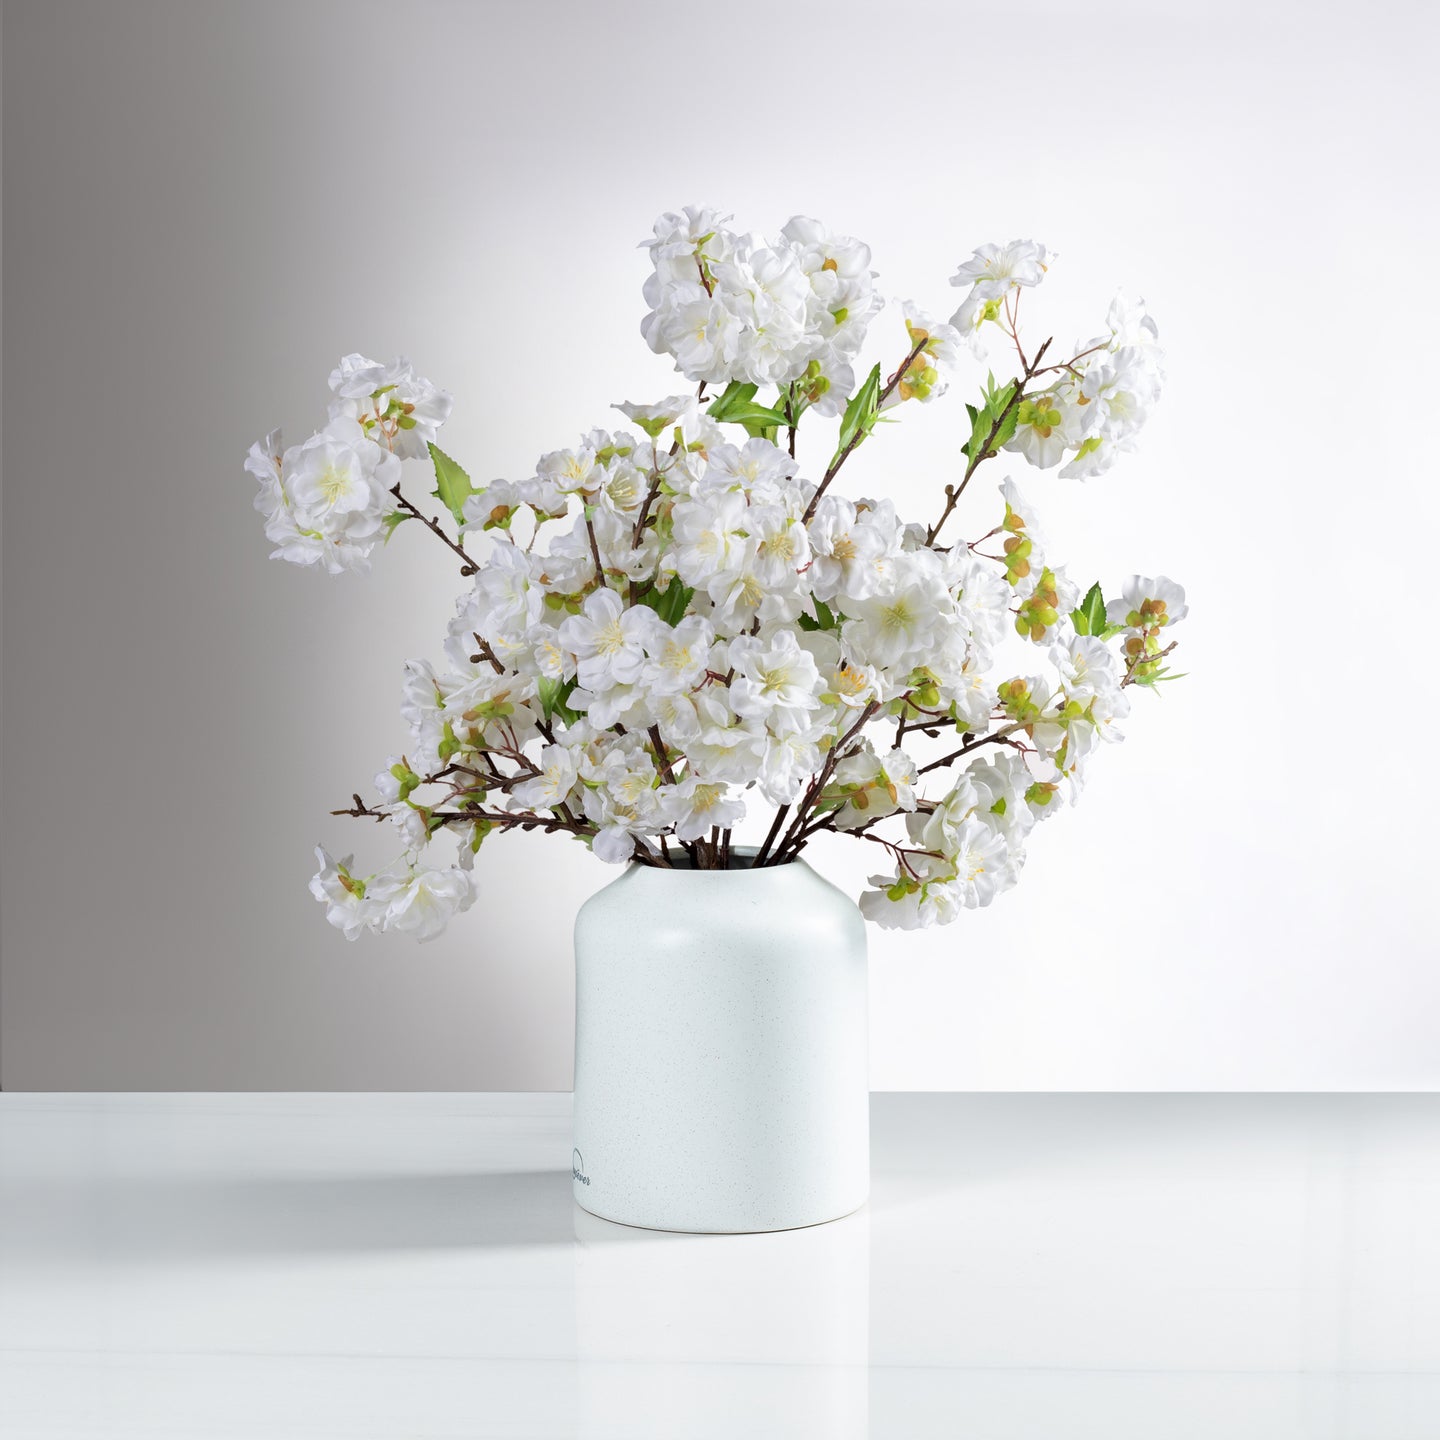 Flynn Cherry Blossom white item # 8221